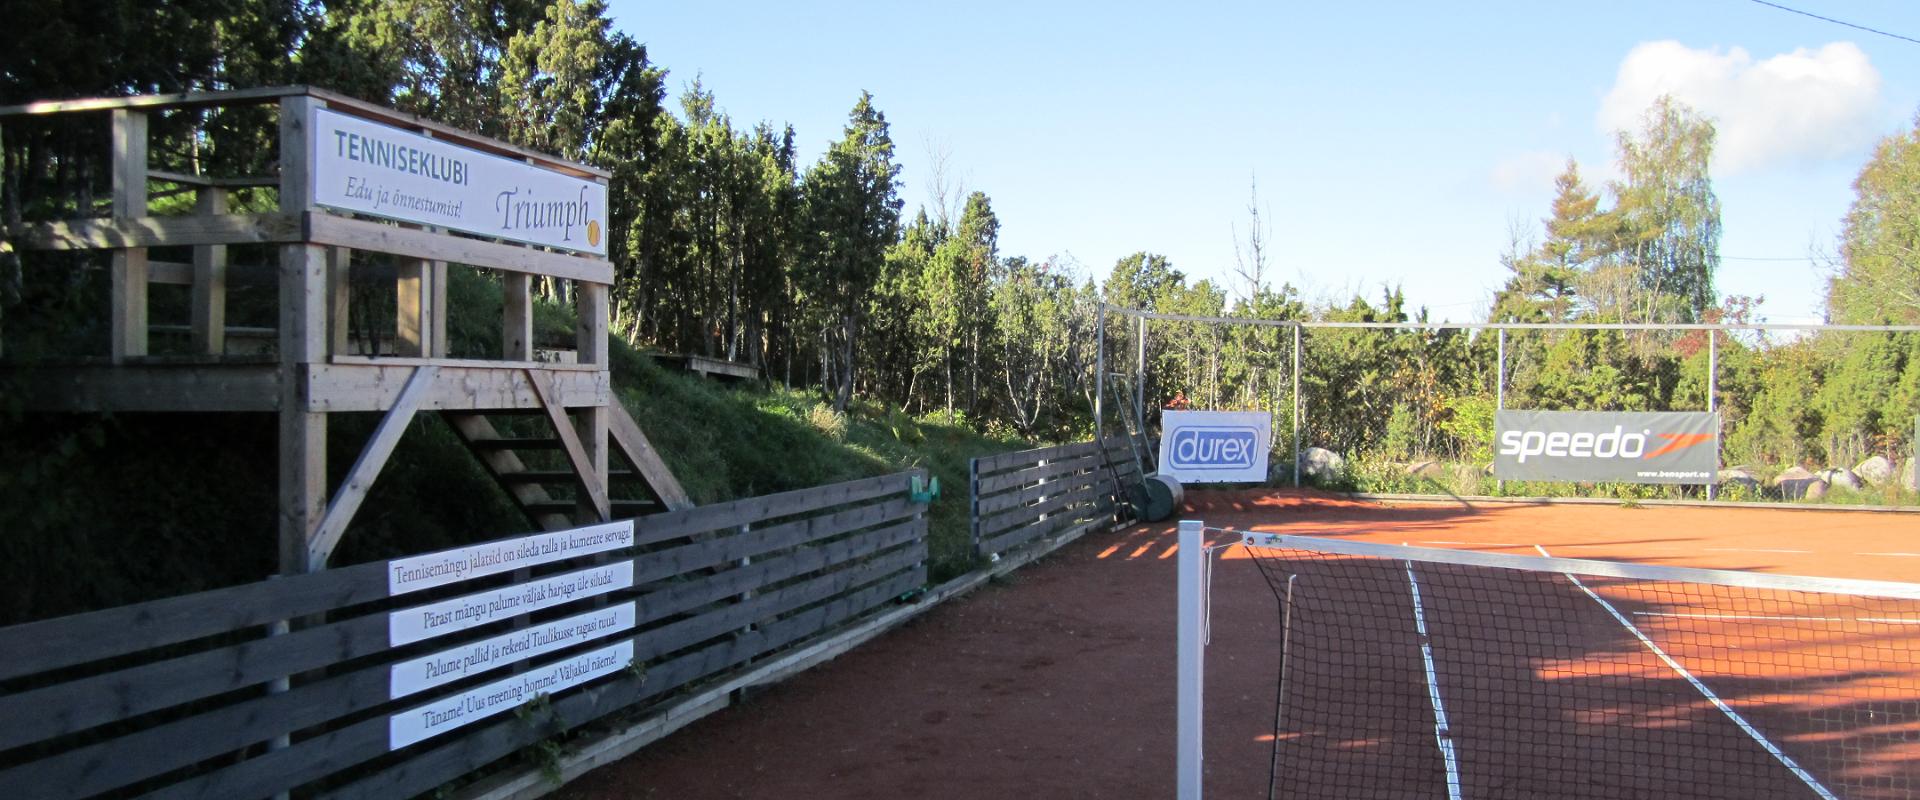 Pivarootsi Windmill, tennis court